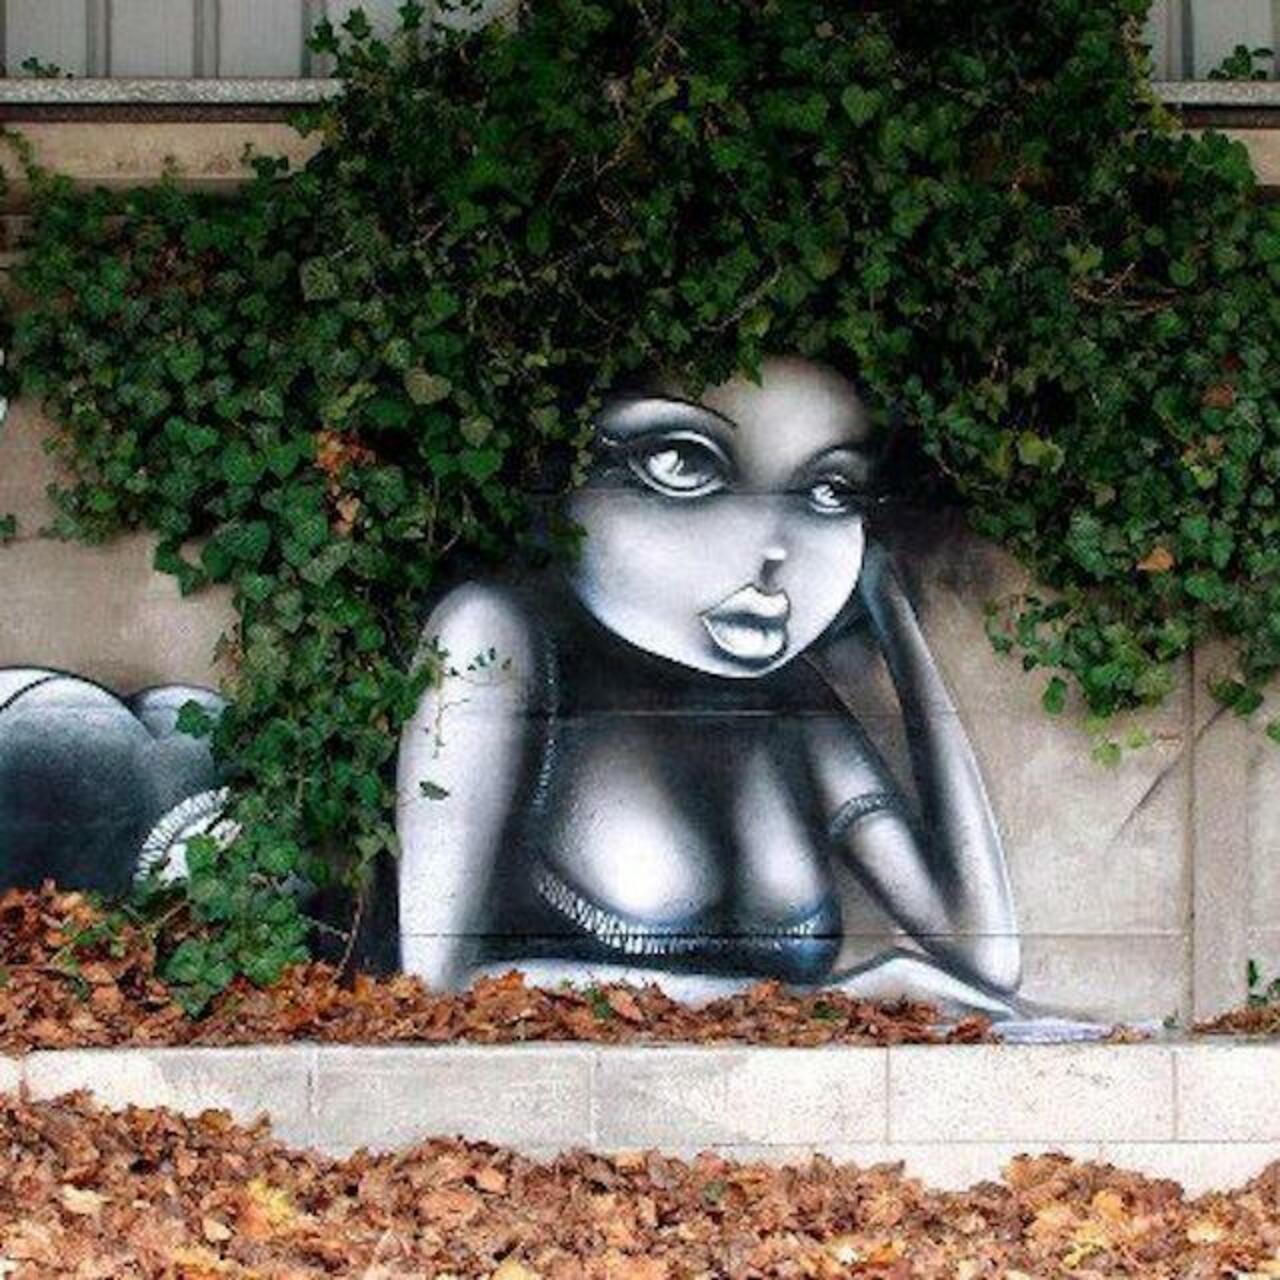 Nice hairstyle. Discover more beautiful and creative #streetart here: http://bit.ly/1BZjINu #graffiti https://t.co/yCnseGD9eI